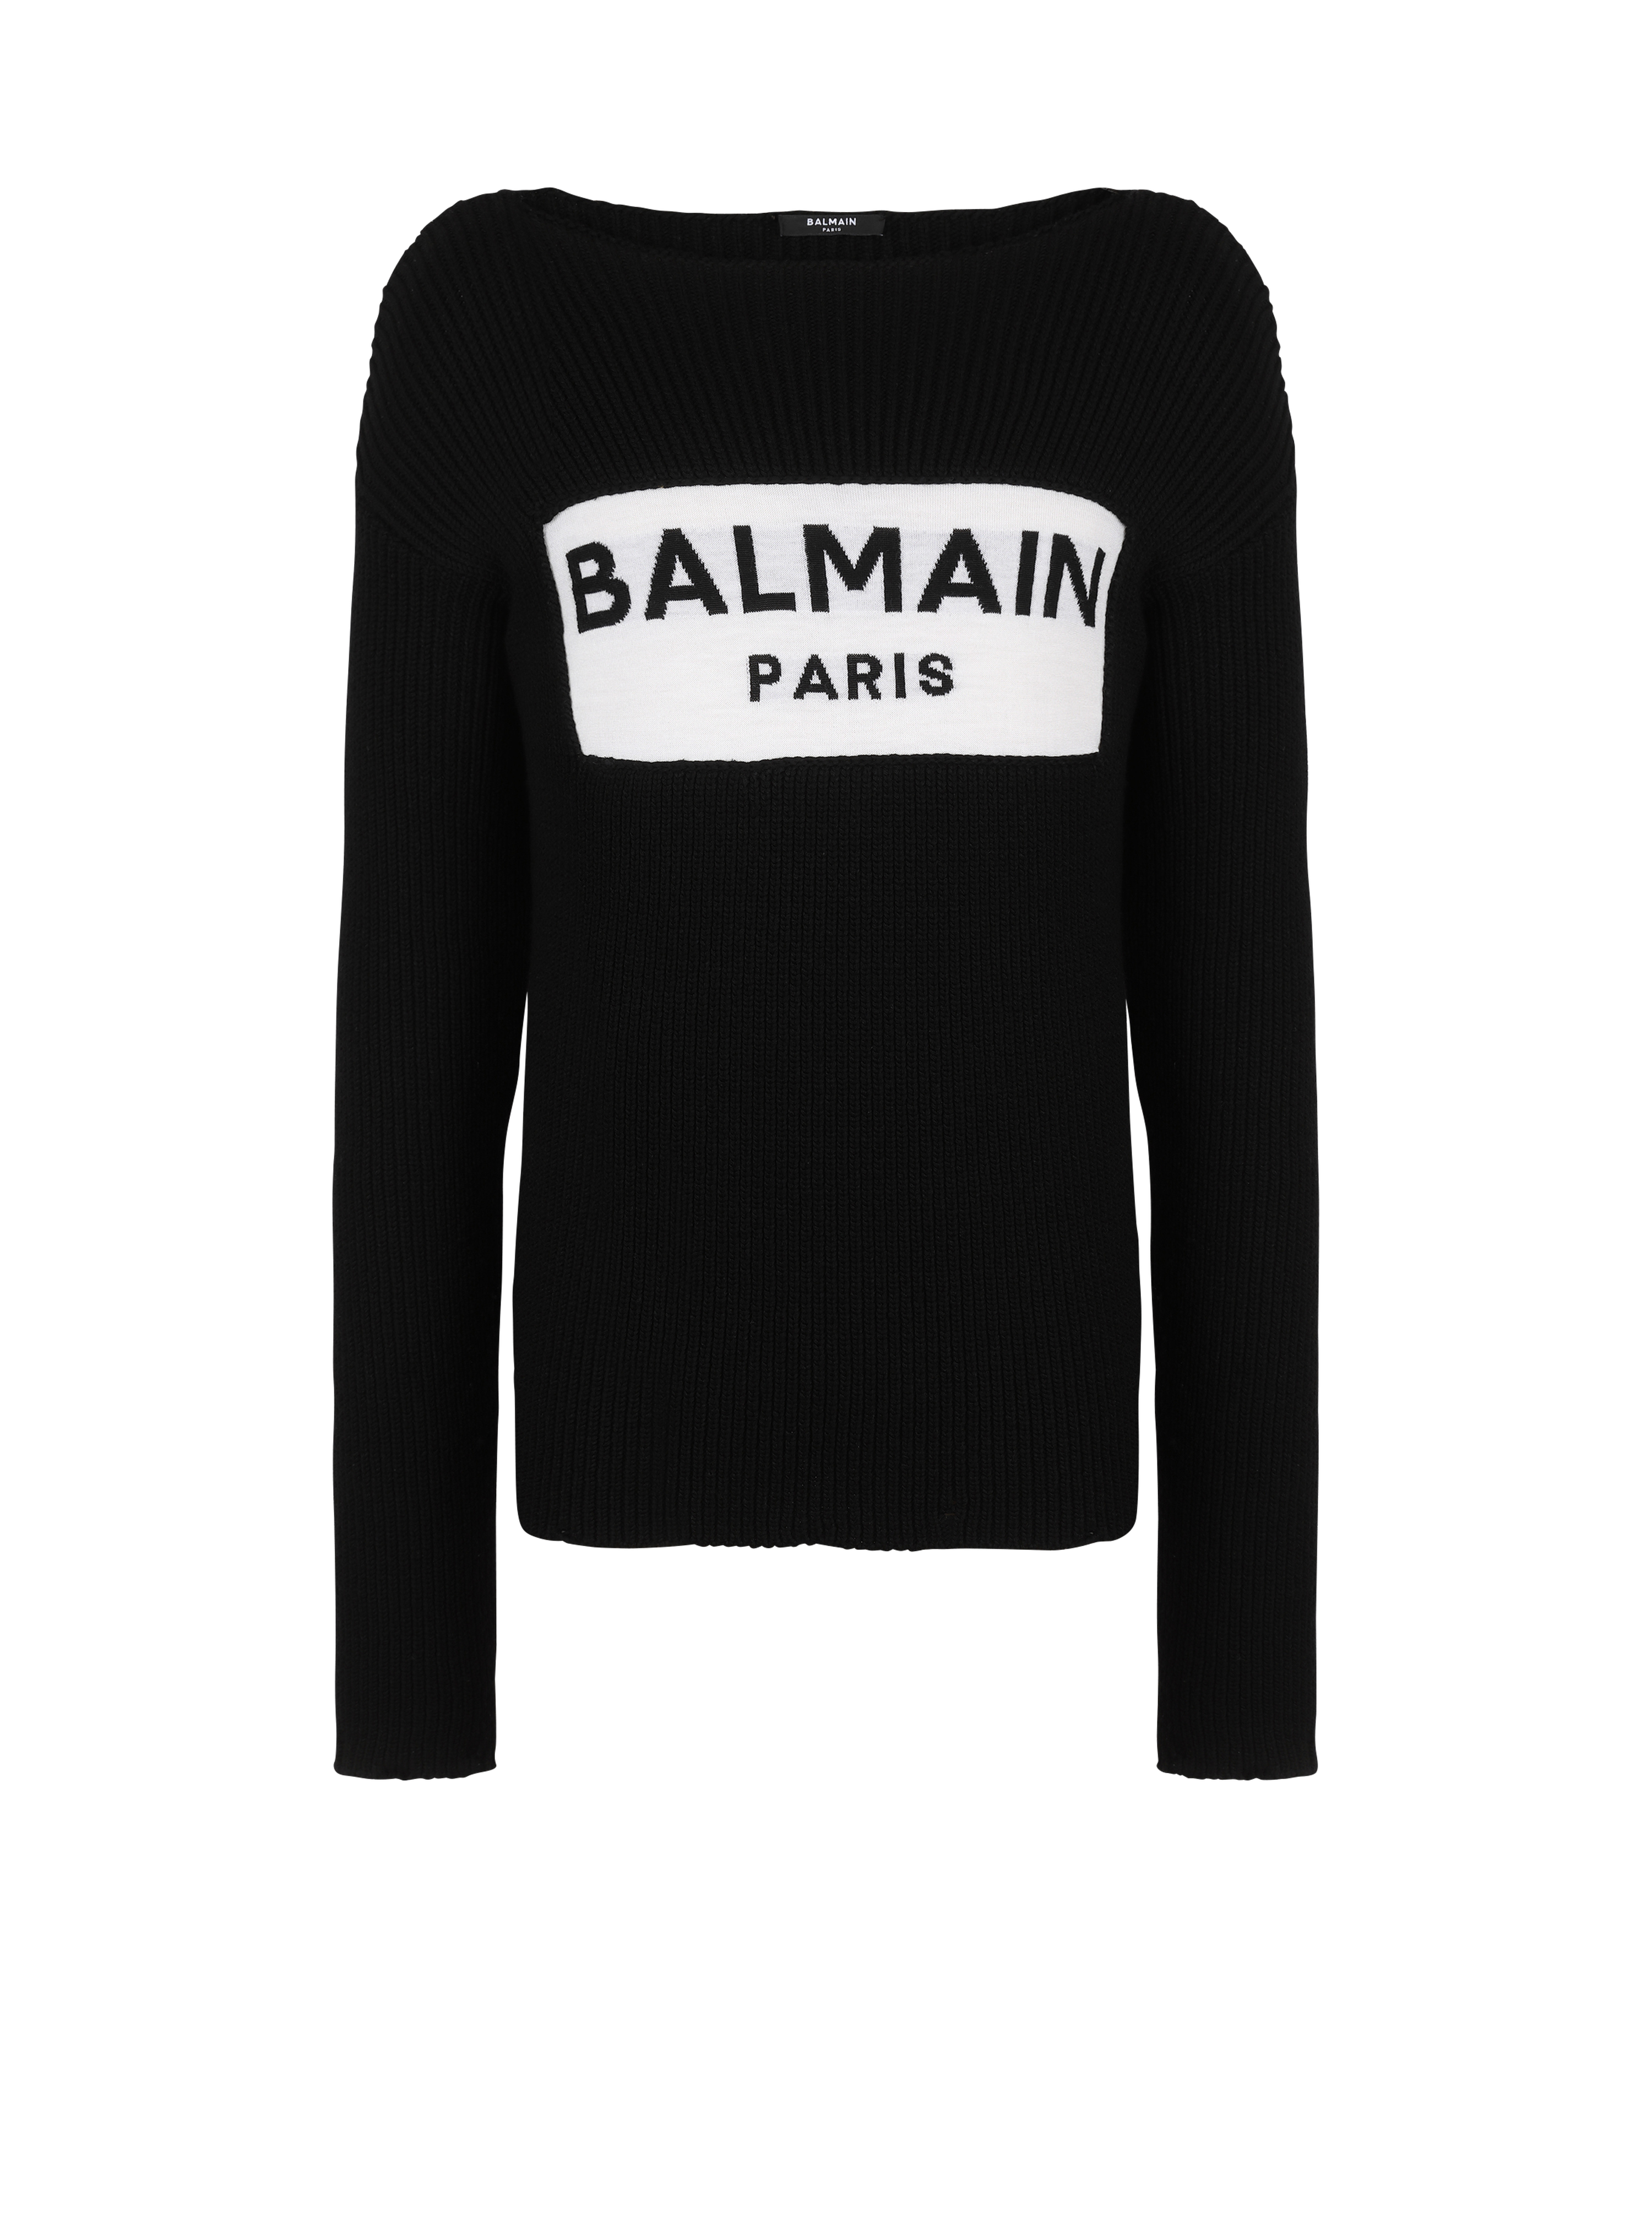 Balmain Paris标志羊毛套头衫, black